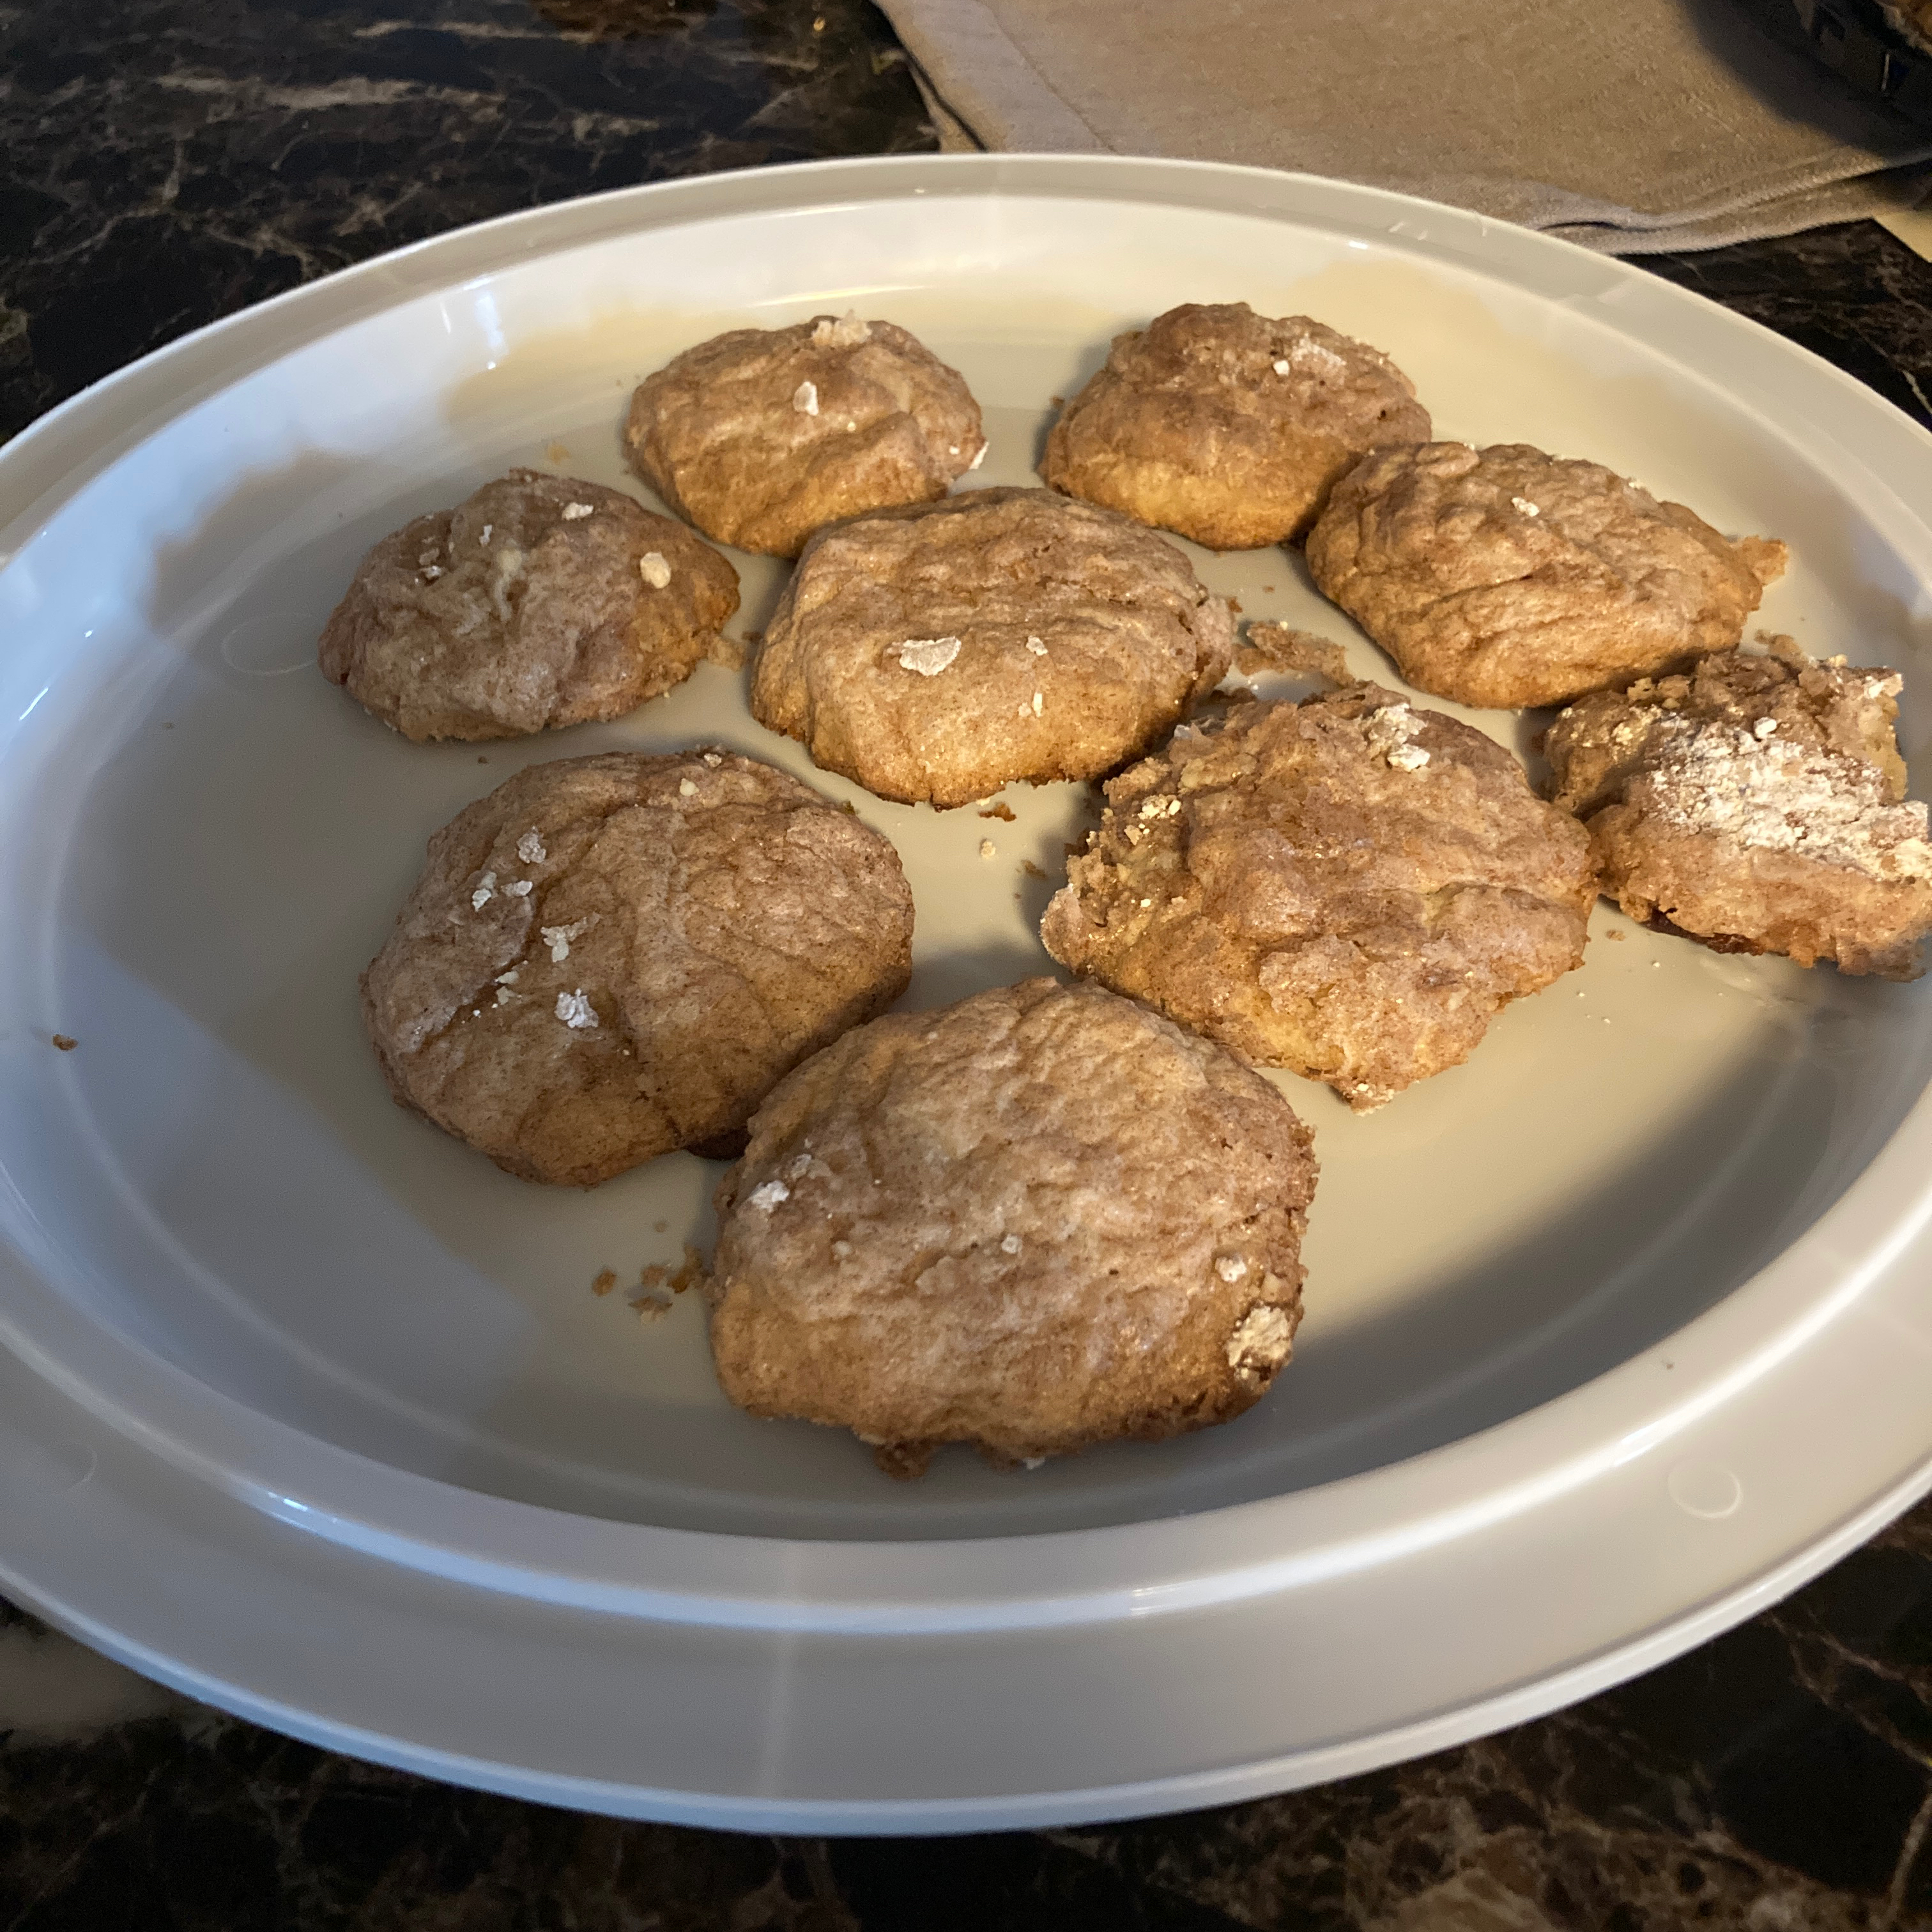 Polvorones de Canele (Cinnamon Cookies) Cook What!